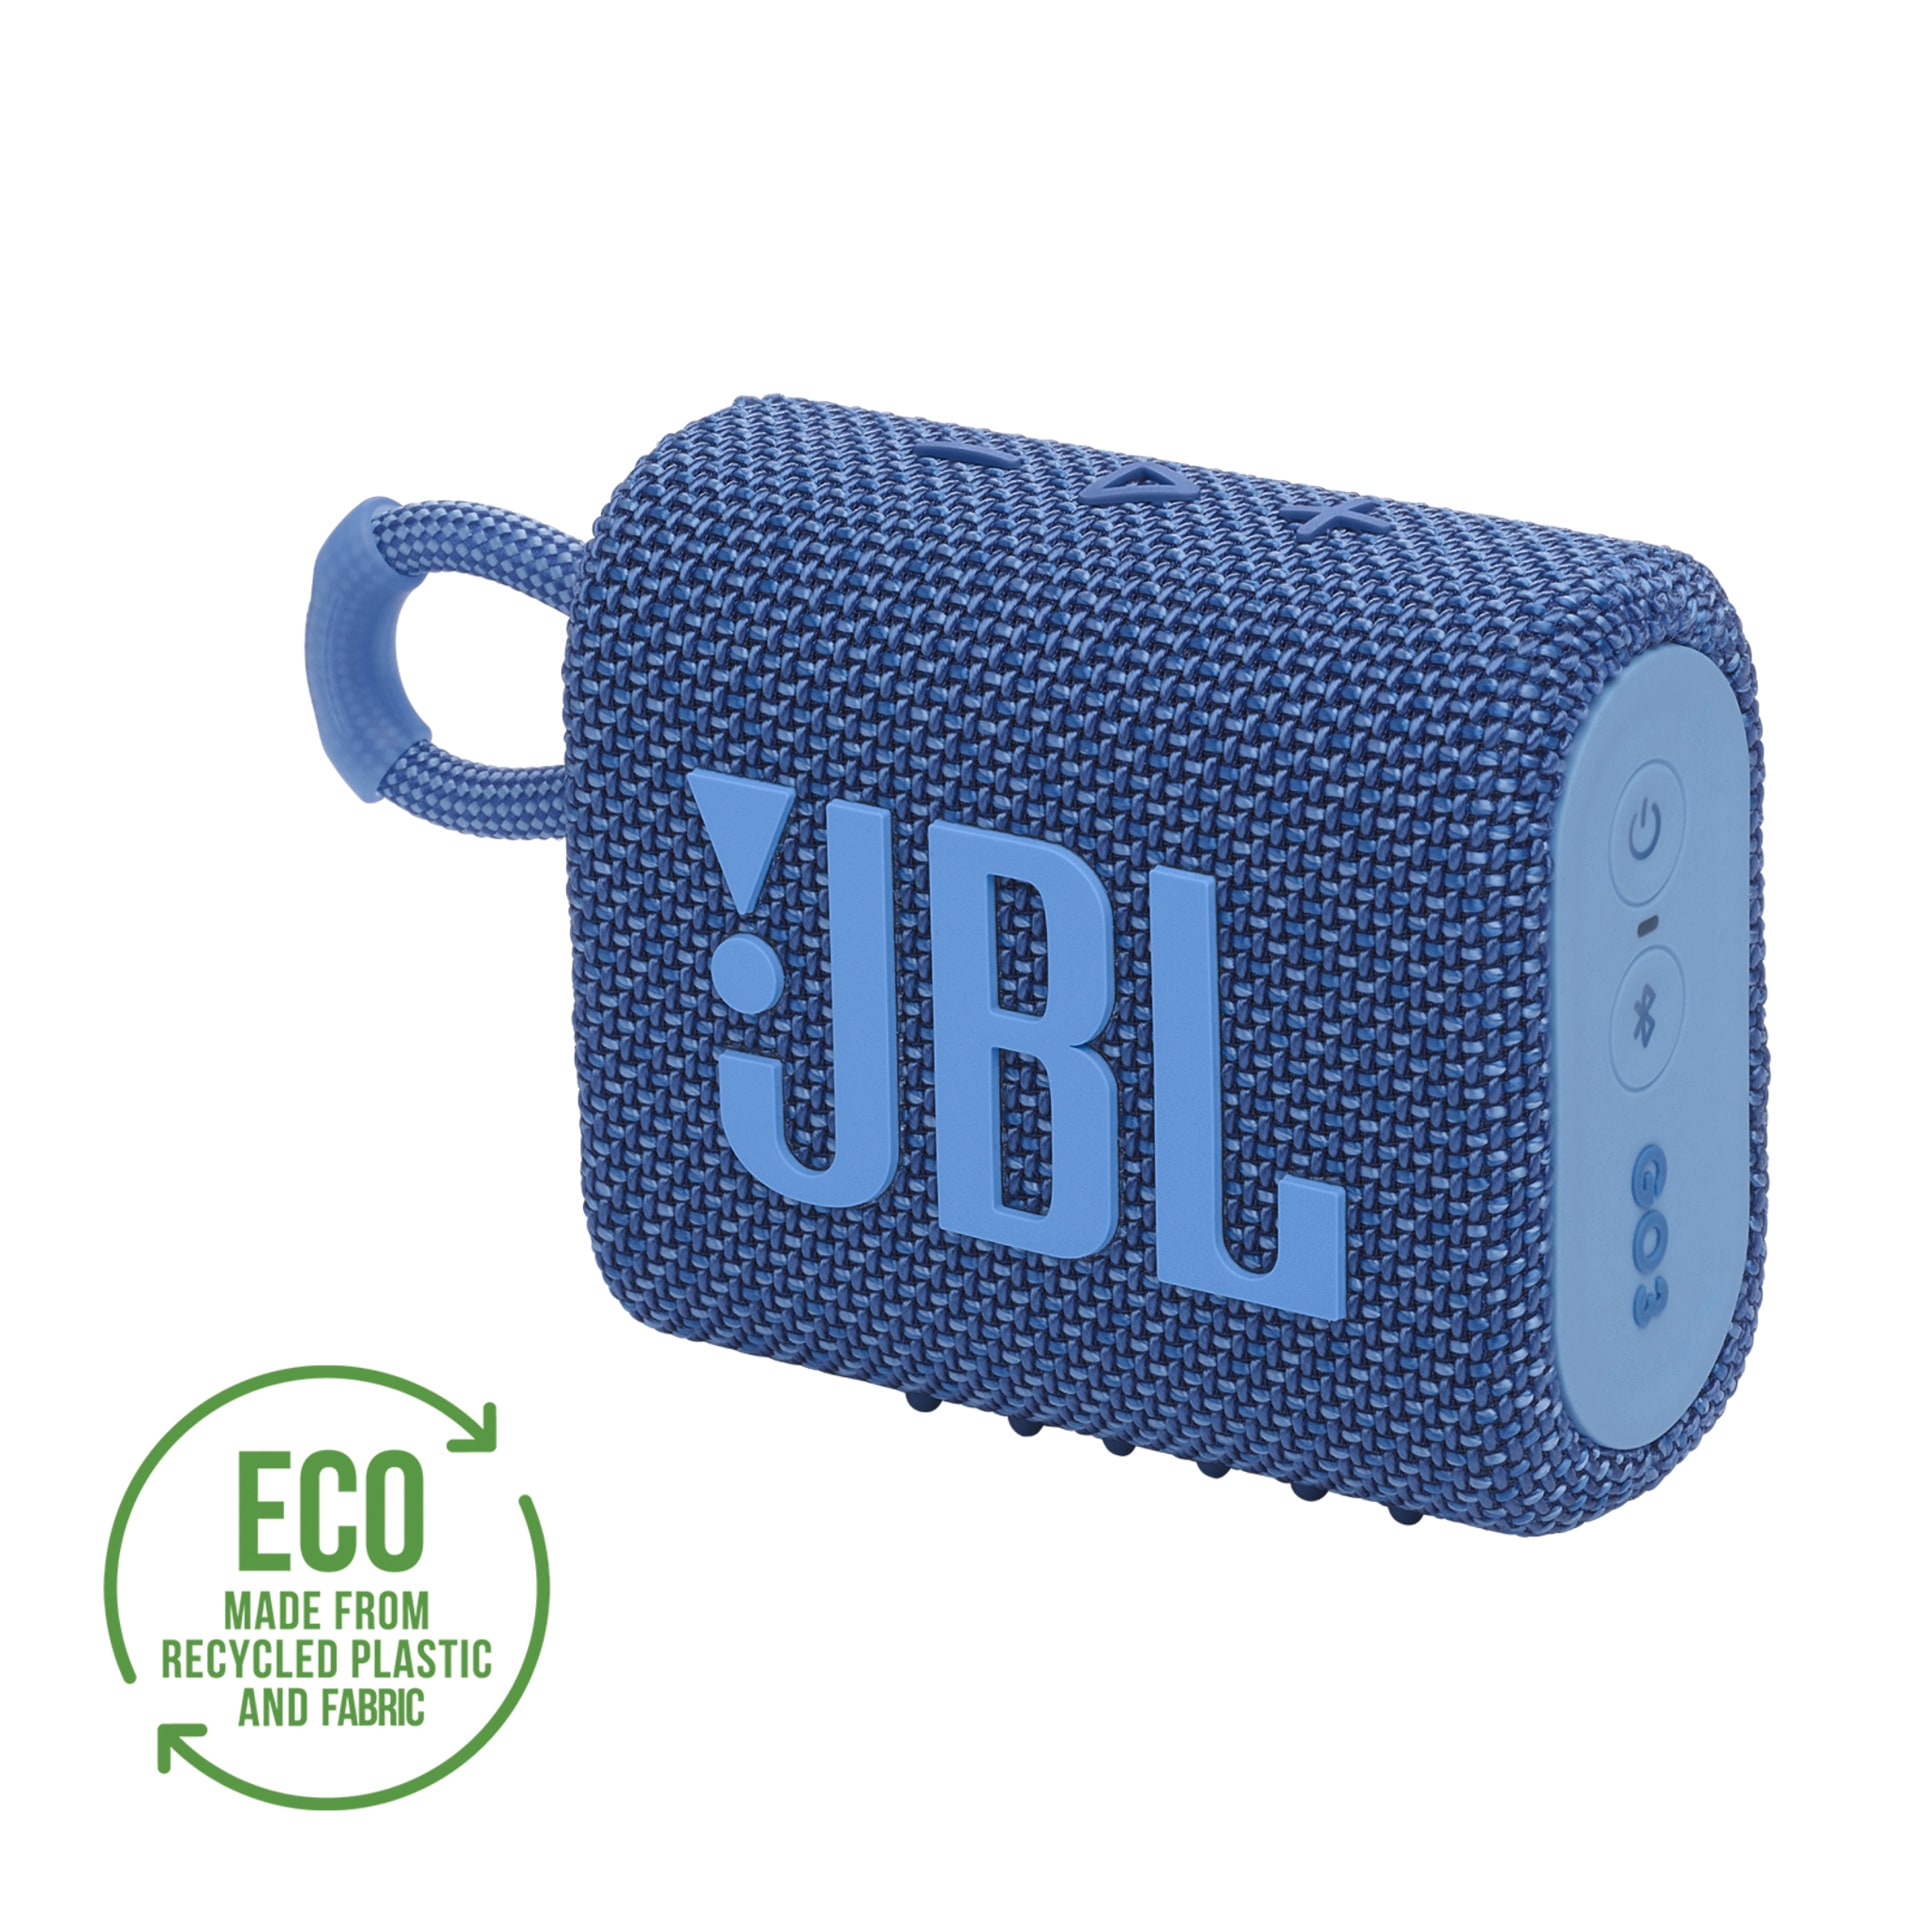 JBL Bluetooth-Lautsprecher »GO 3 ECO« (1 S...